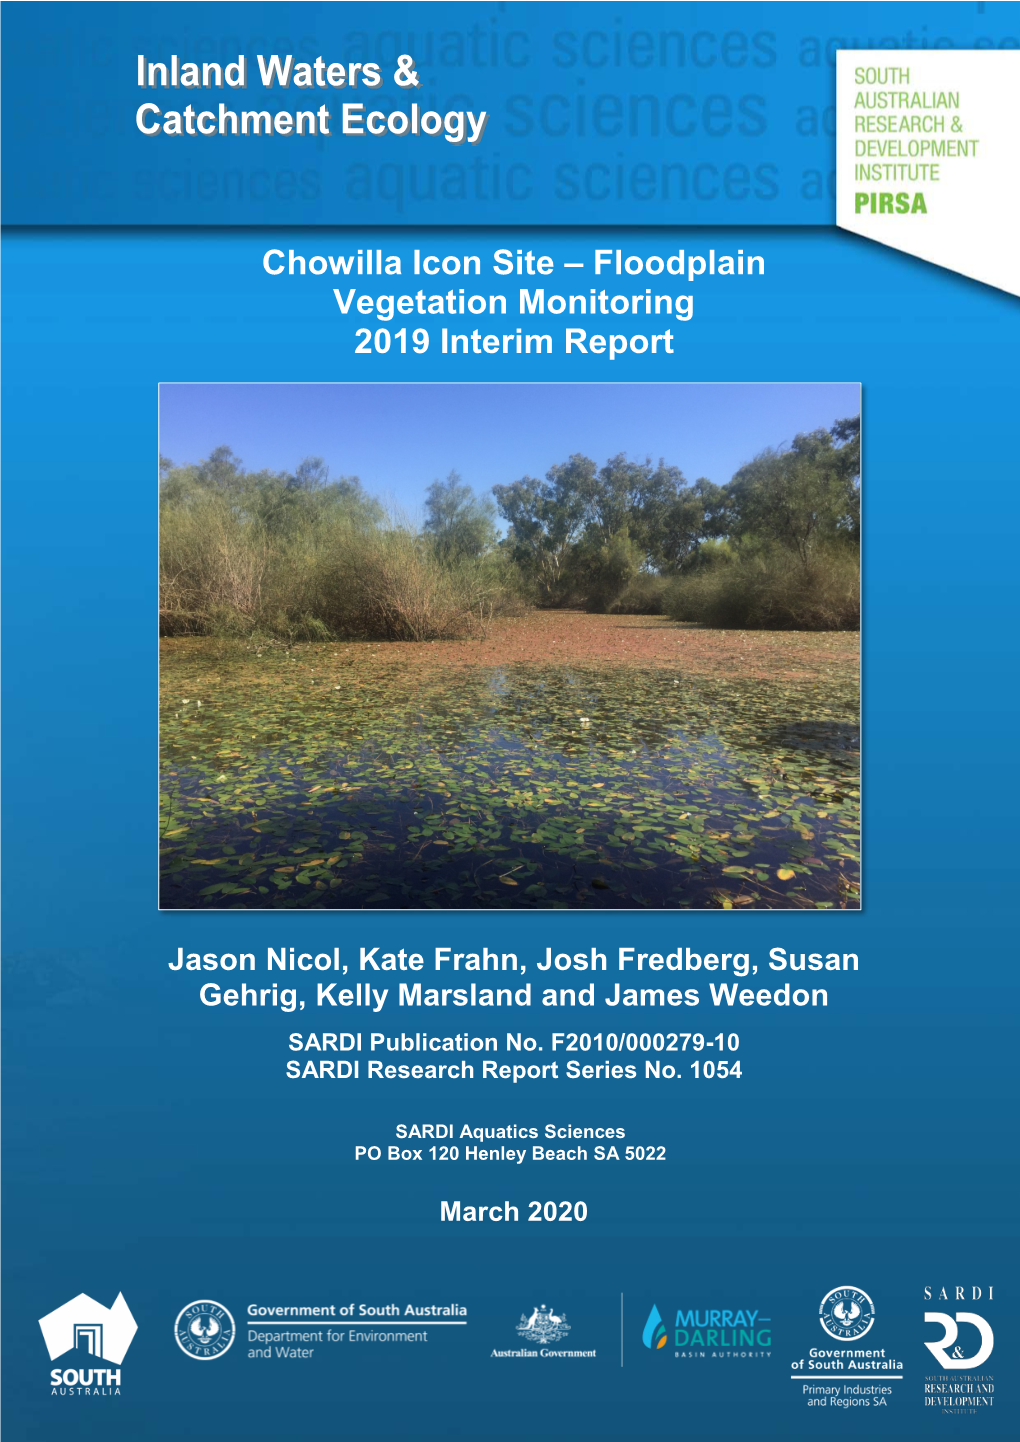 Chowilla Icon Site – Floodplain Vegetation Monitoring 2019 Interim Report